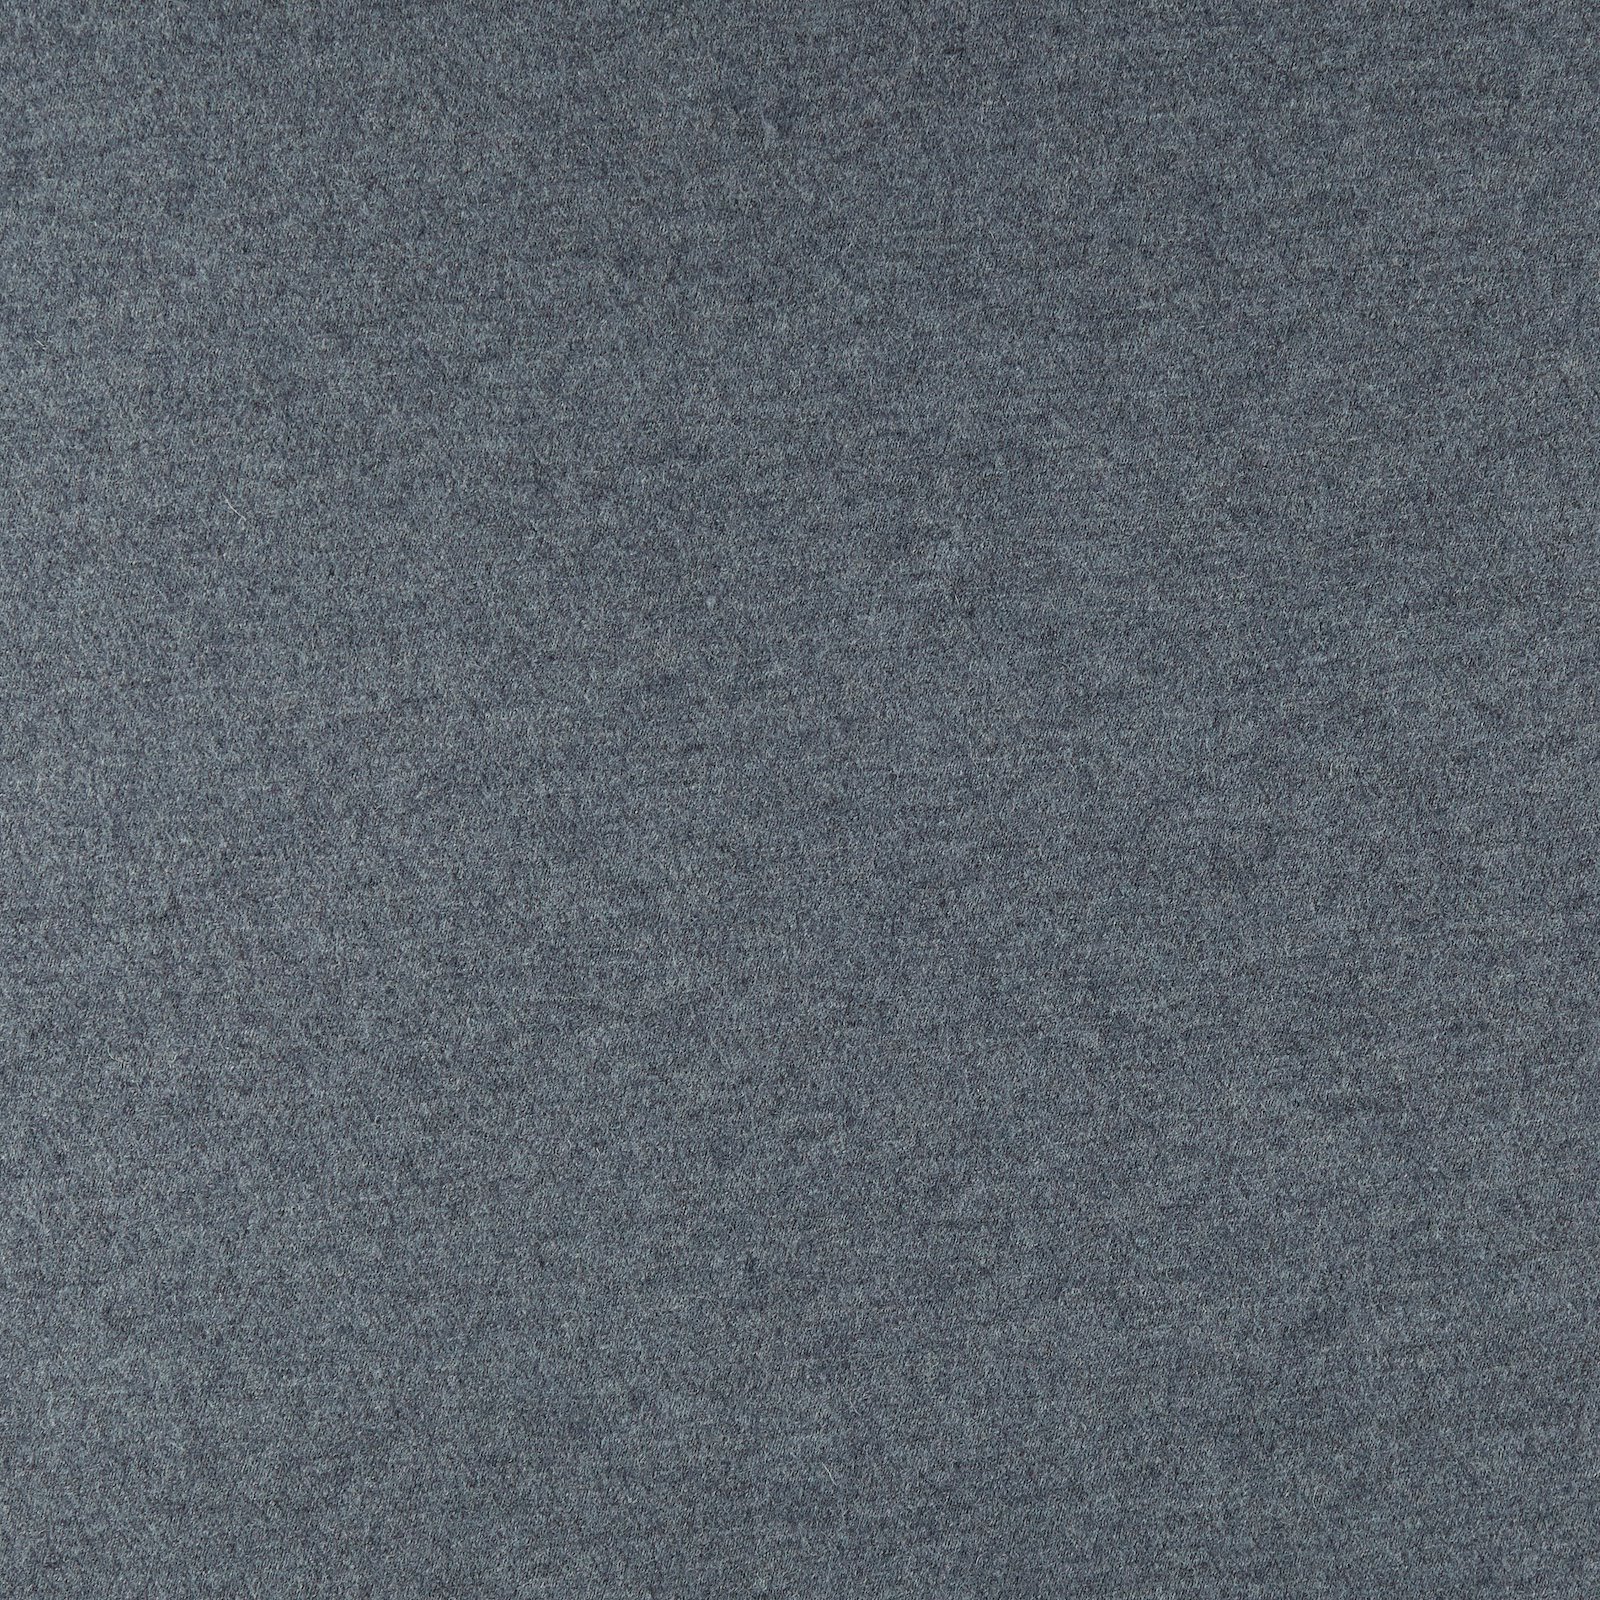 Knit wool boucle dark dusty blue 300293_pack_solid